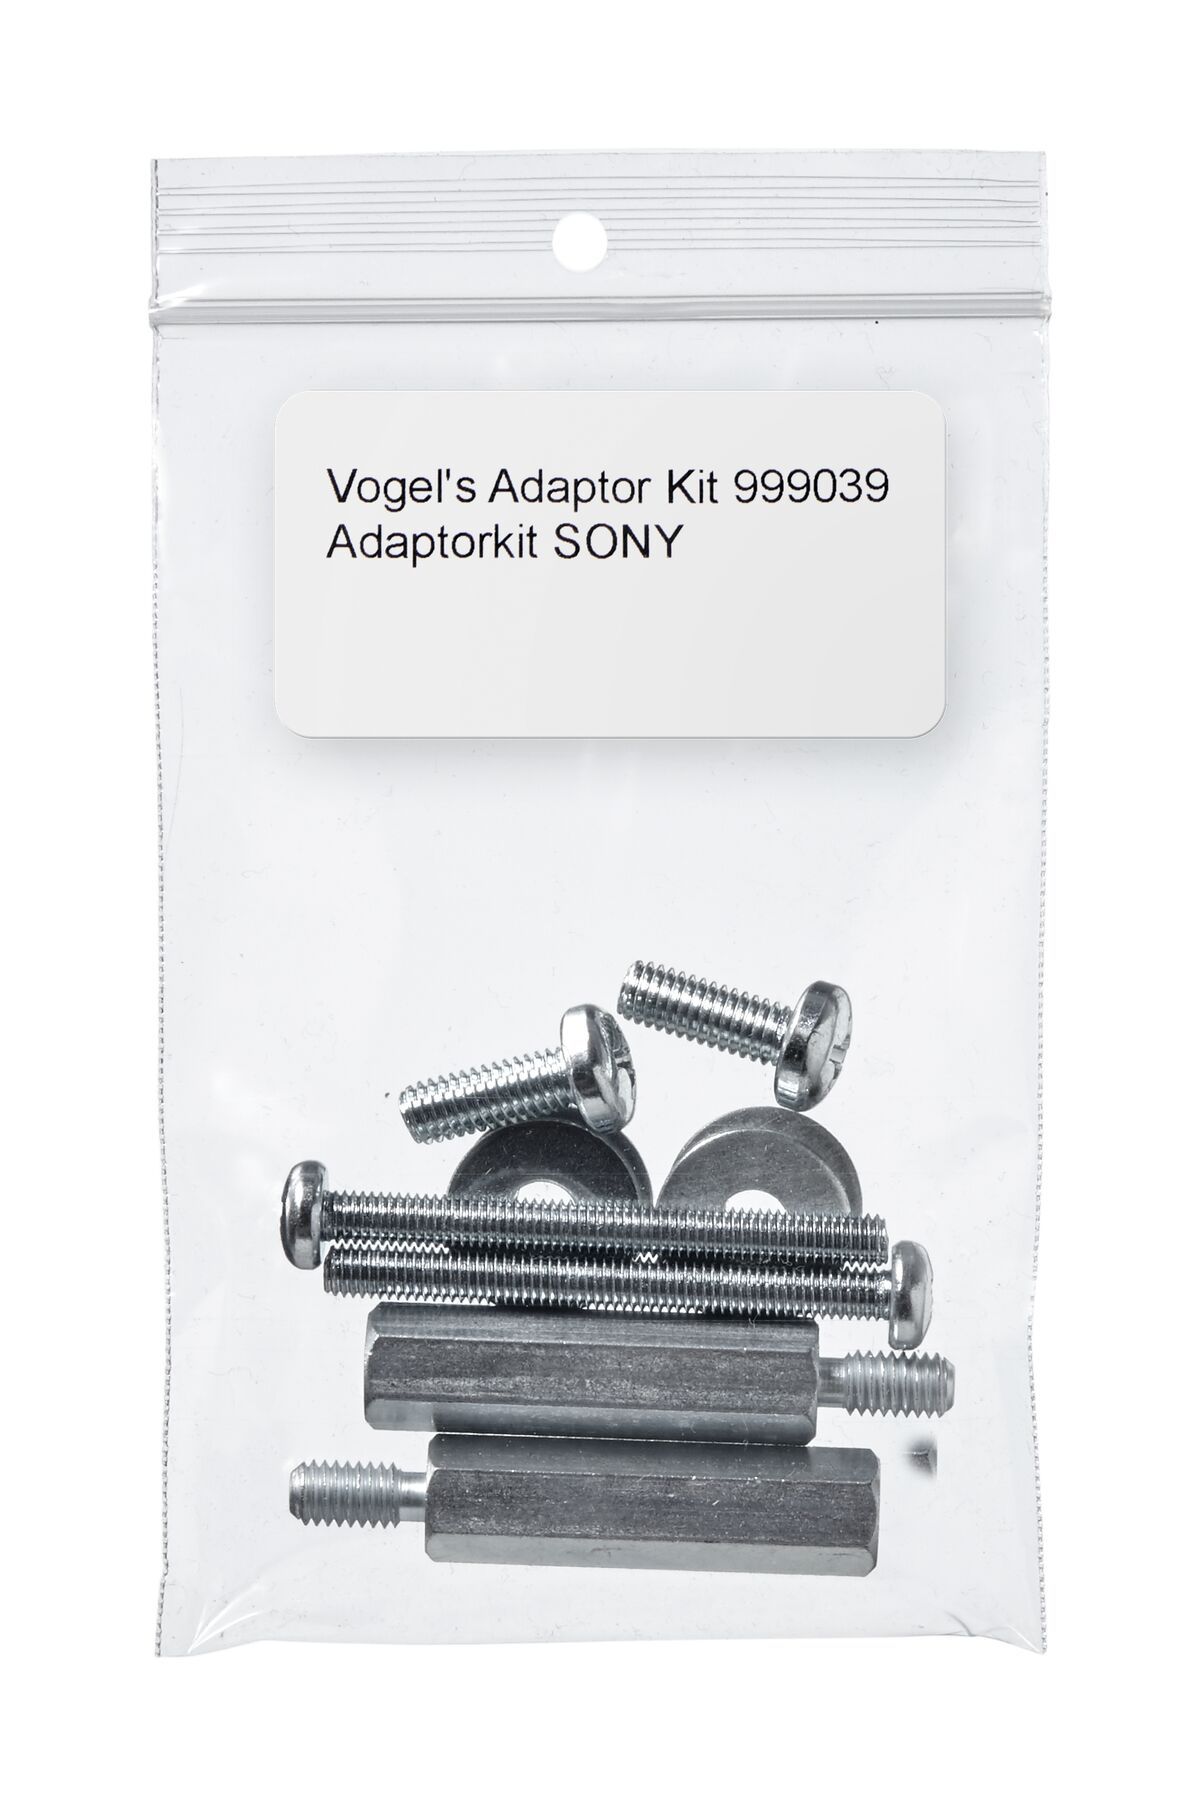 Vogel's Adaptor Kit - SONY - Product